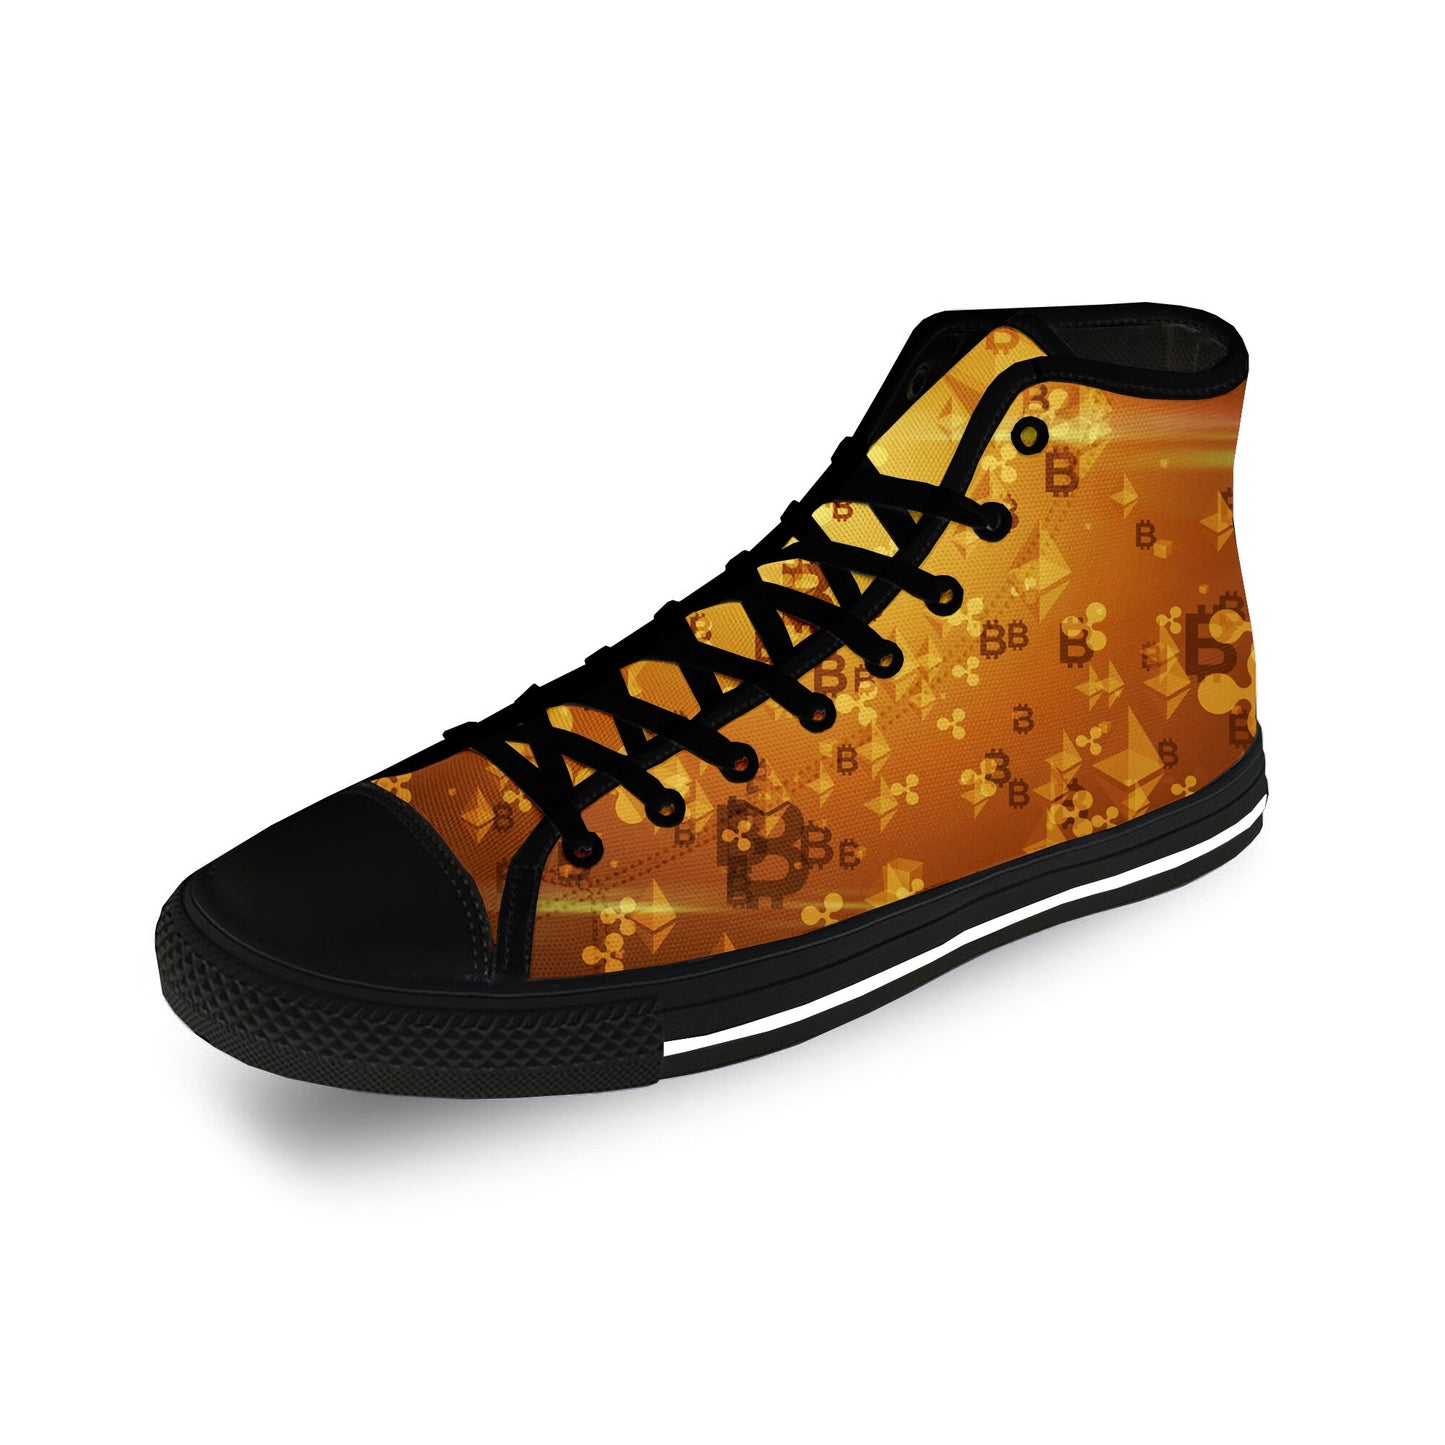 Bitcoin sneakers 14 designs